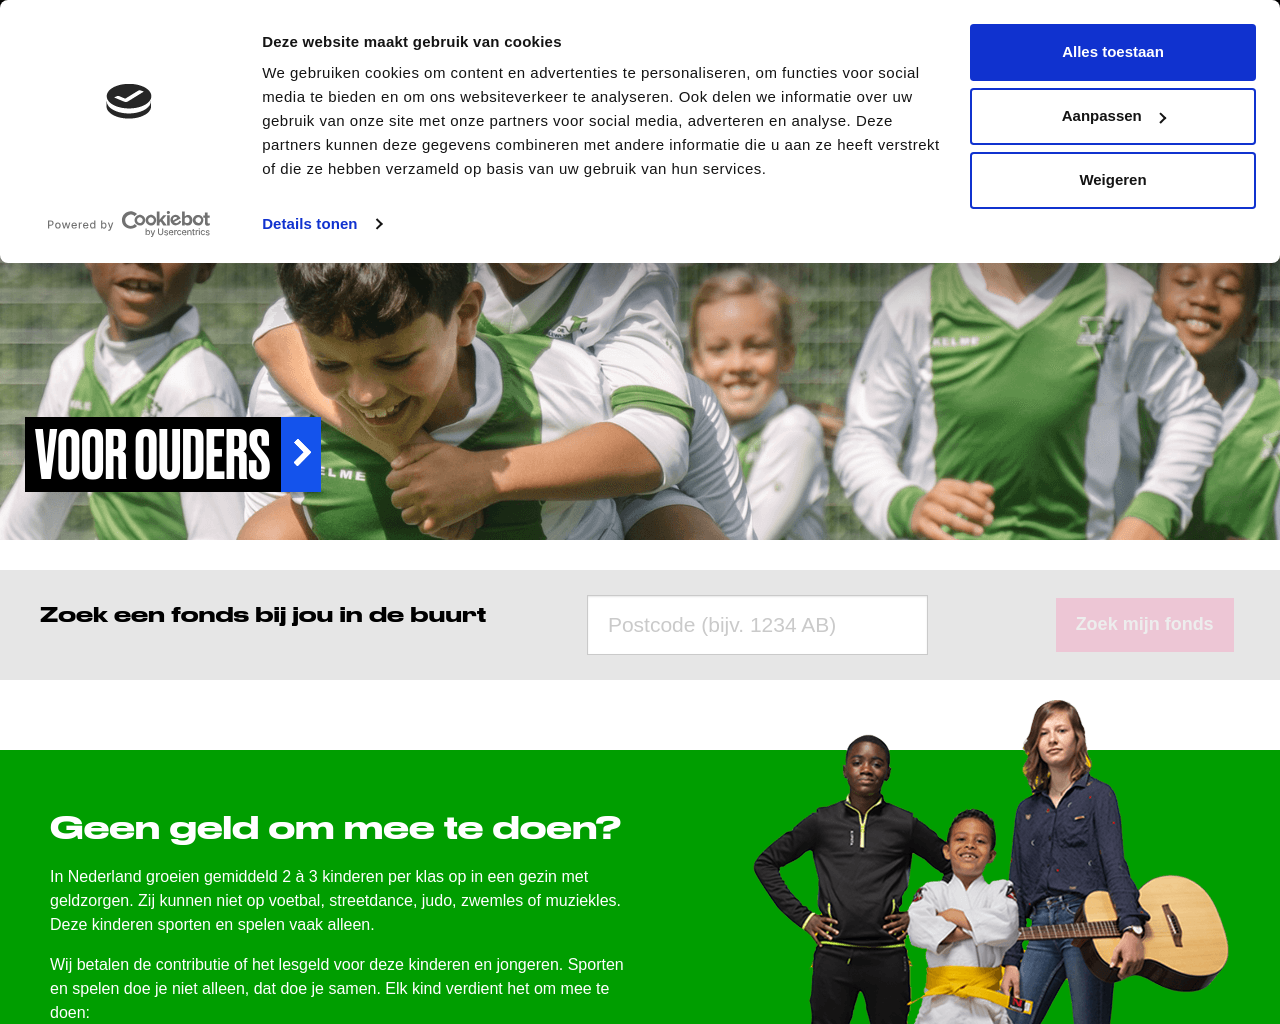 jeugdfondssportencultuur.nl